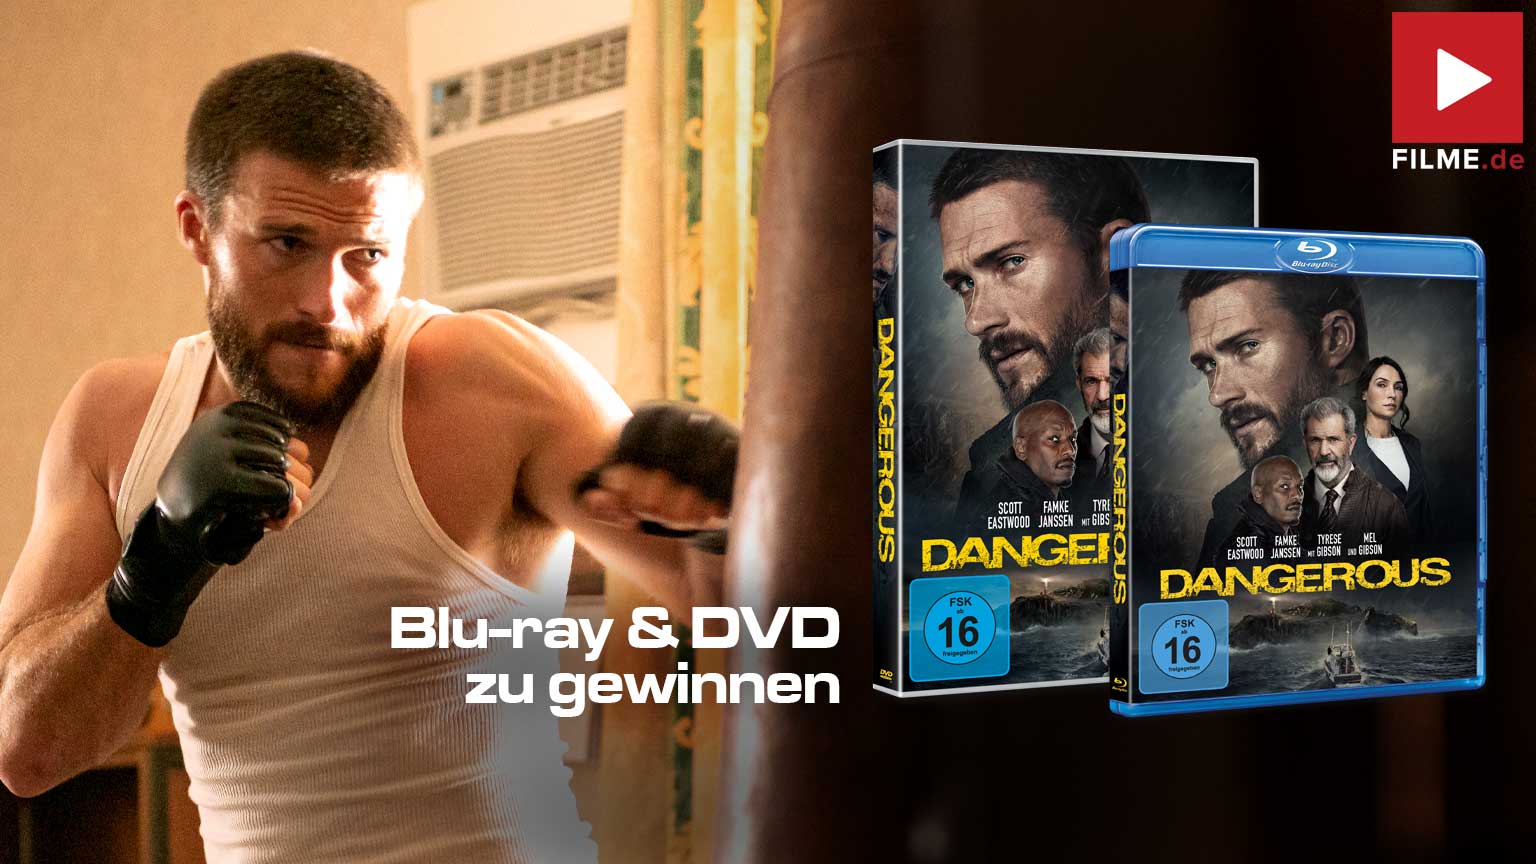 DANGEROUS Film 2022 Blu-ray DVD Trailer gewinnspiel gewinnen Artikelbild